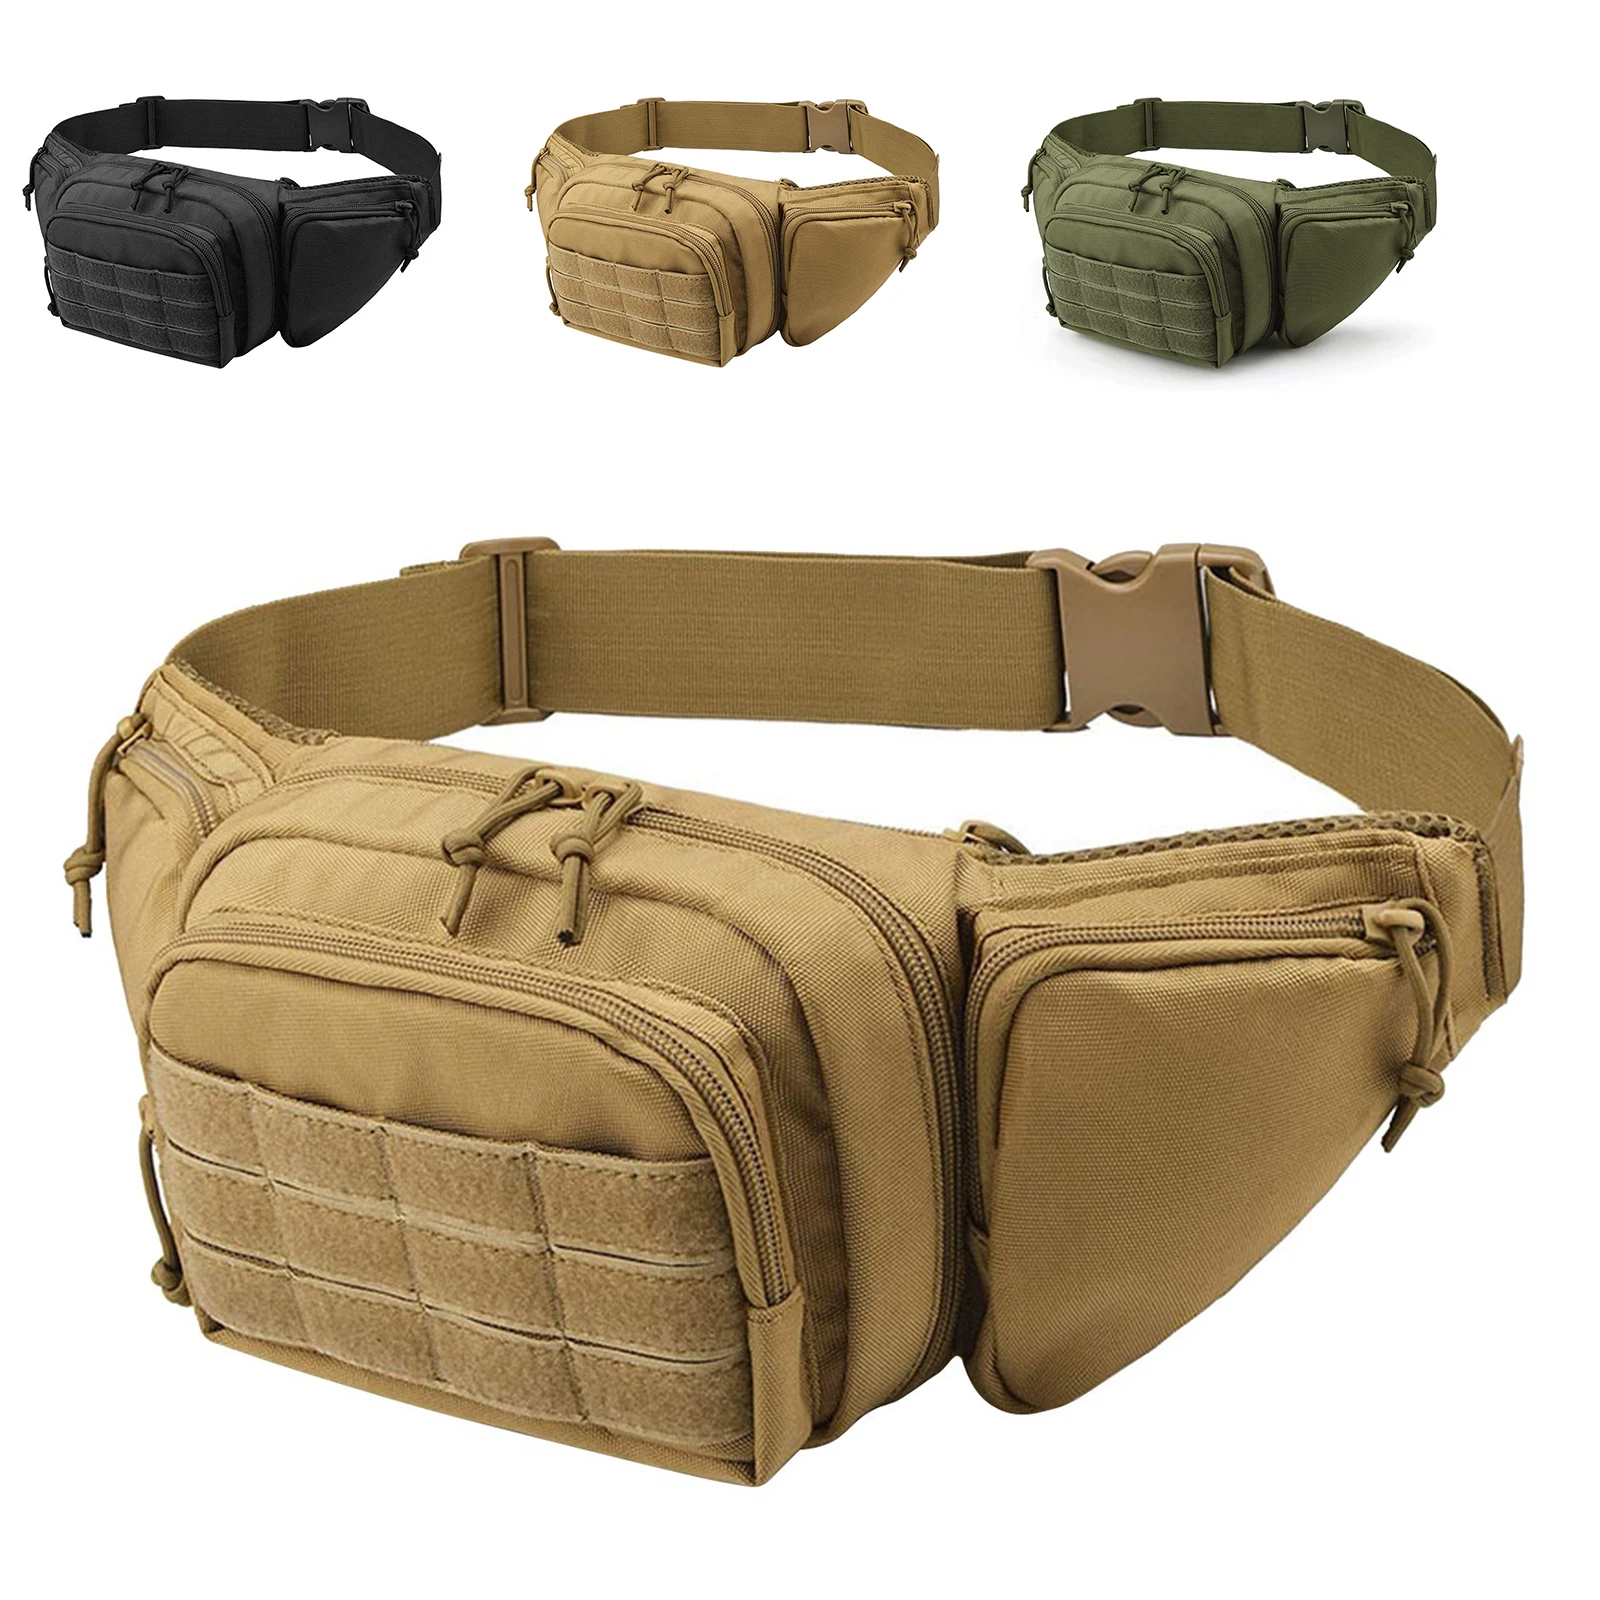 Concealed Carry Fanny Pack Holster Tactical Pistol Waist Pack Bag Gun Holster 